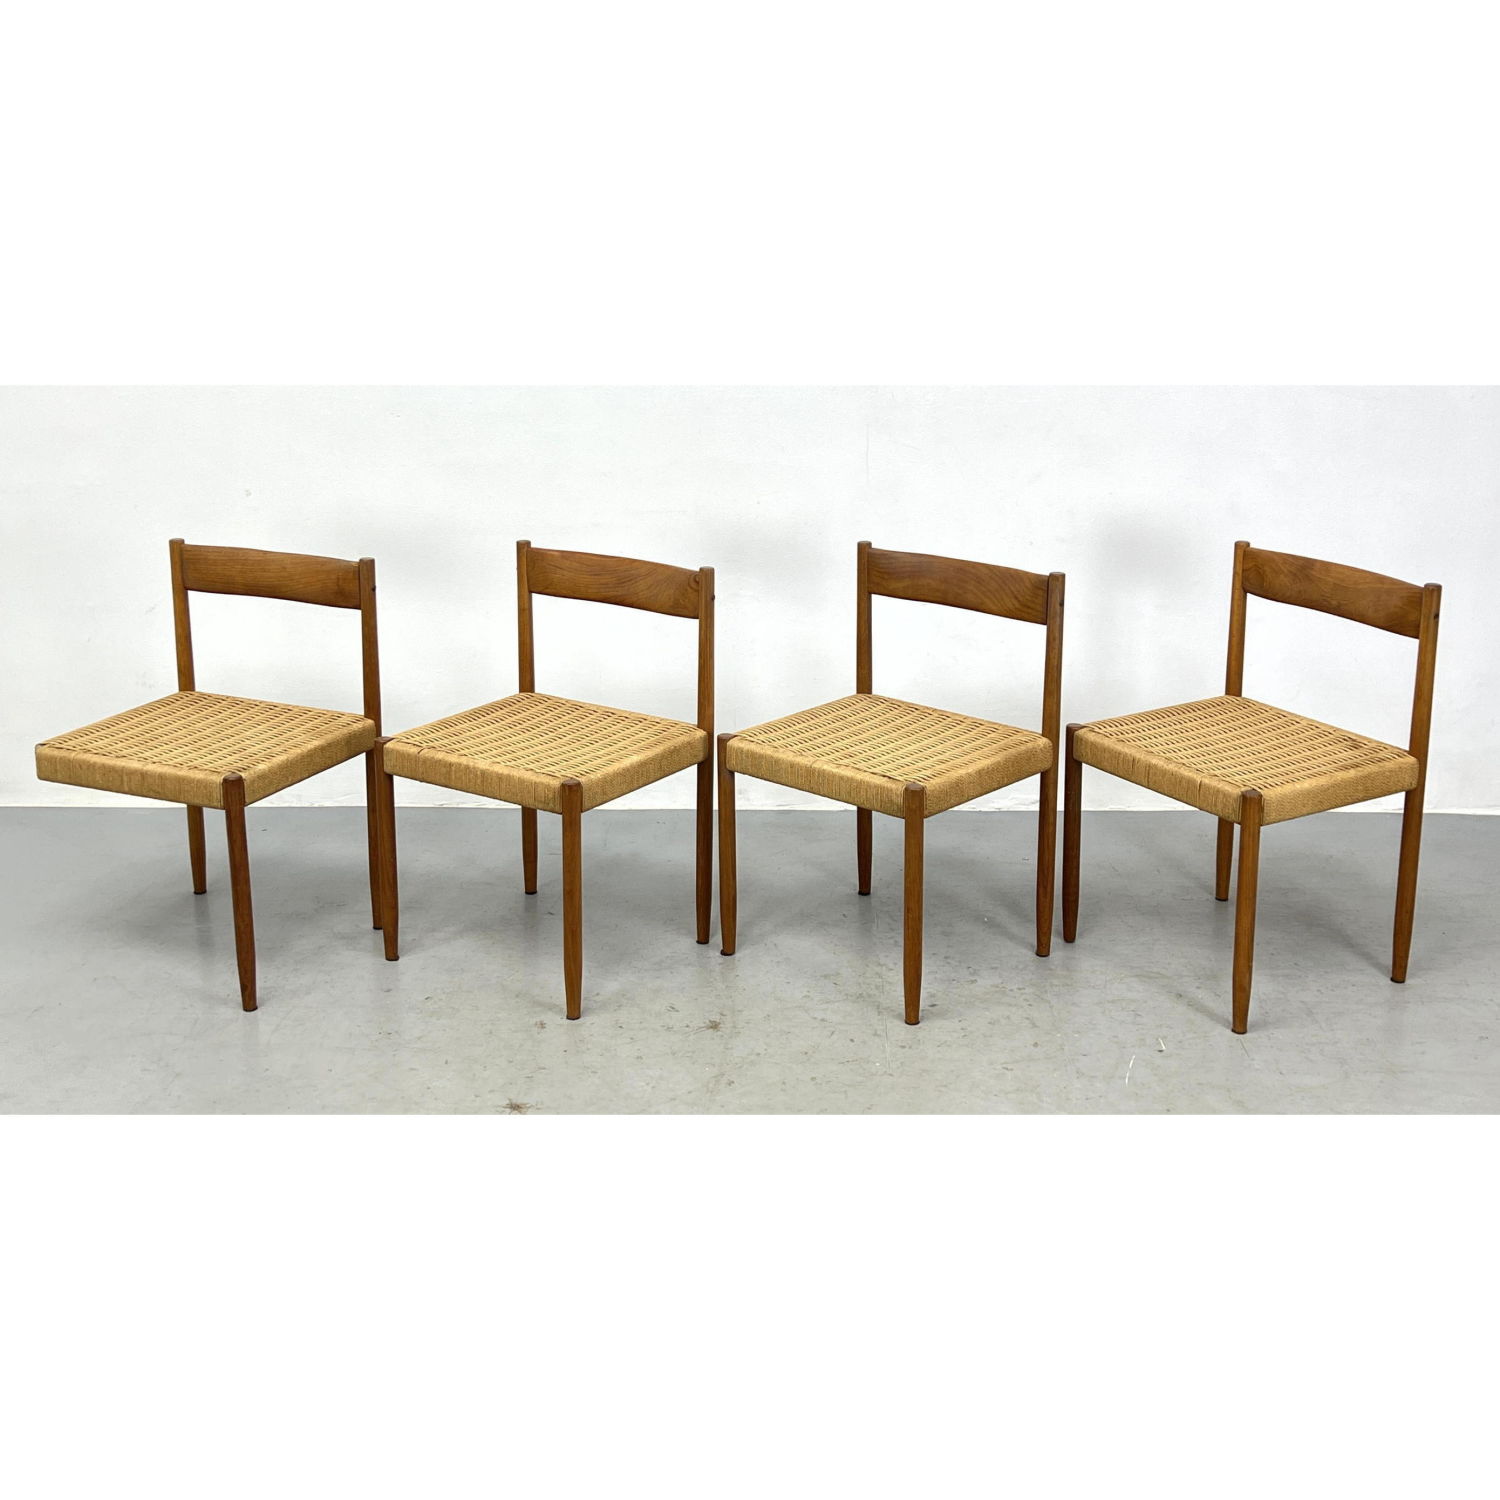 Set 4 Danish Teak Dining Chairs  2ff267